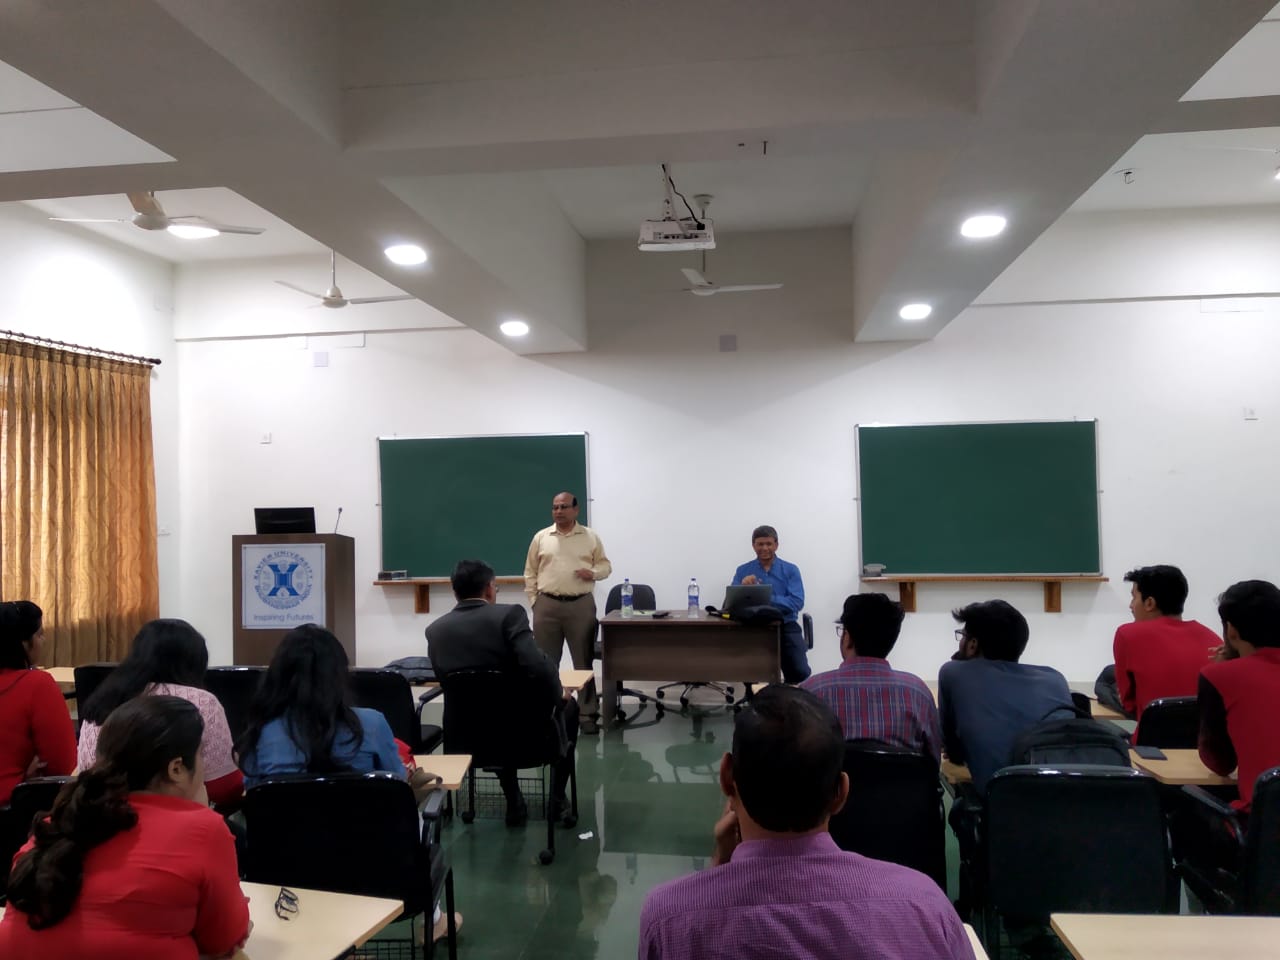 Talk by Prof. Chitta Baral and Dr. Dhanada K. Mishra.